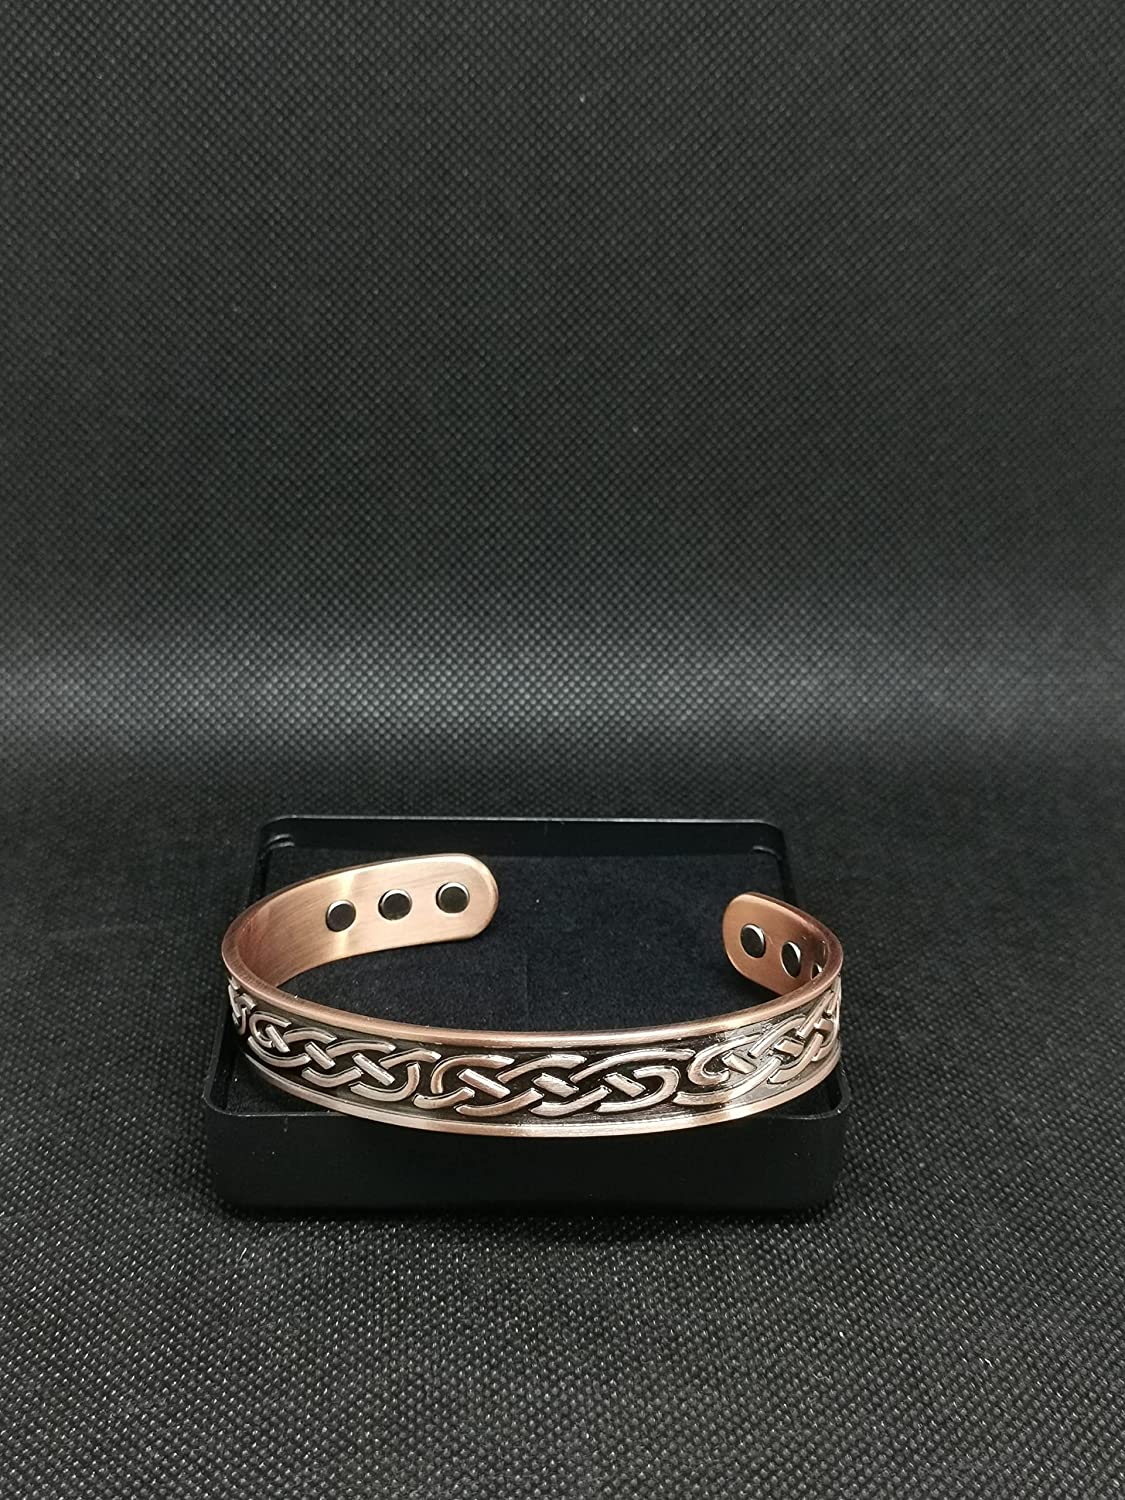 My Copper  Men's and Women's Celtic Design Beautiful Copper Bracelet (original)